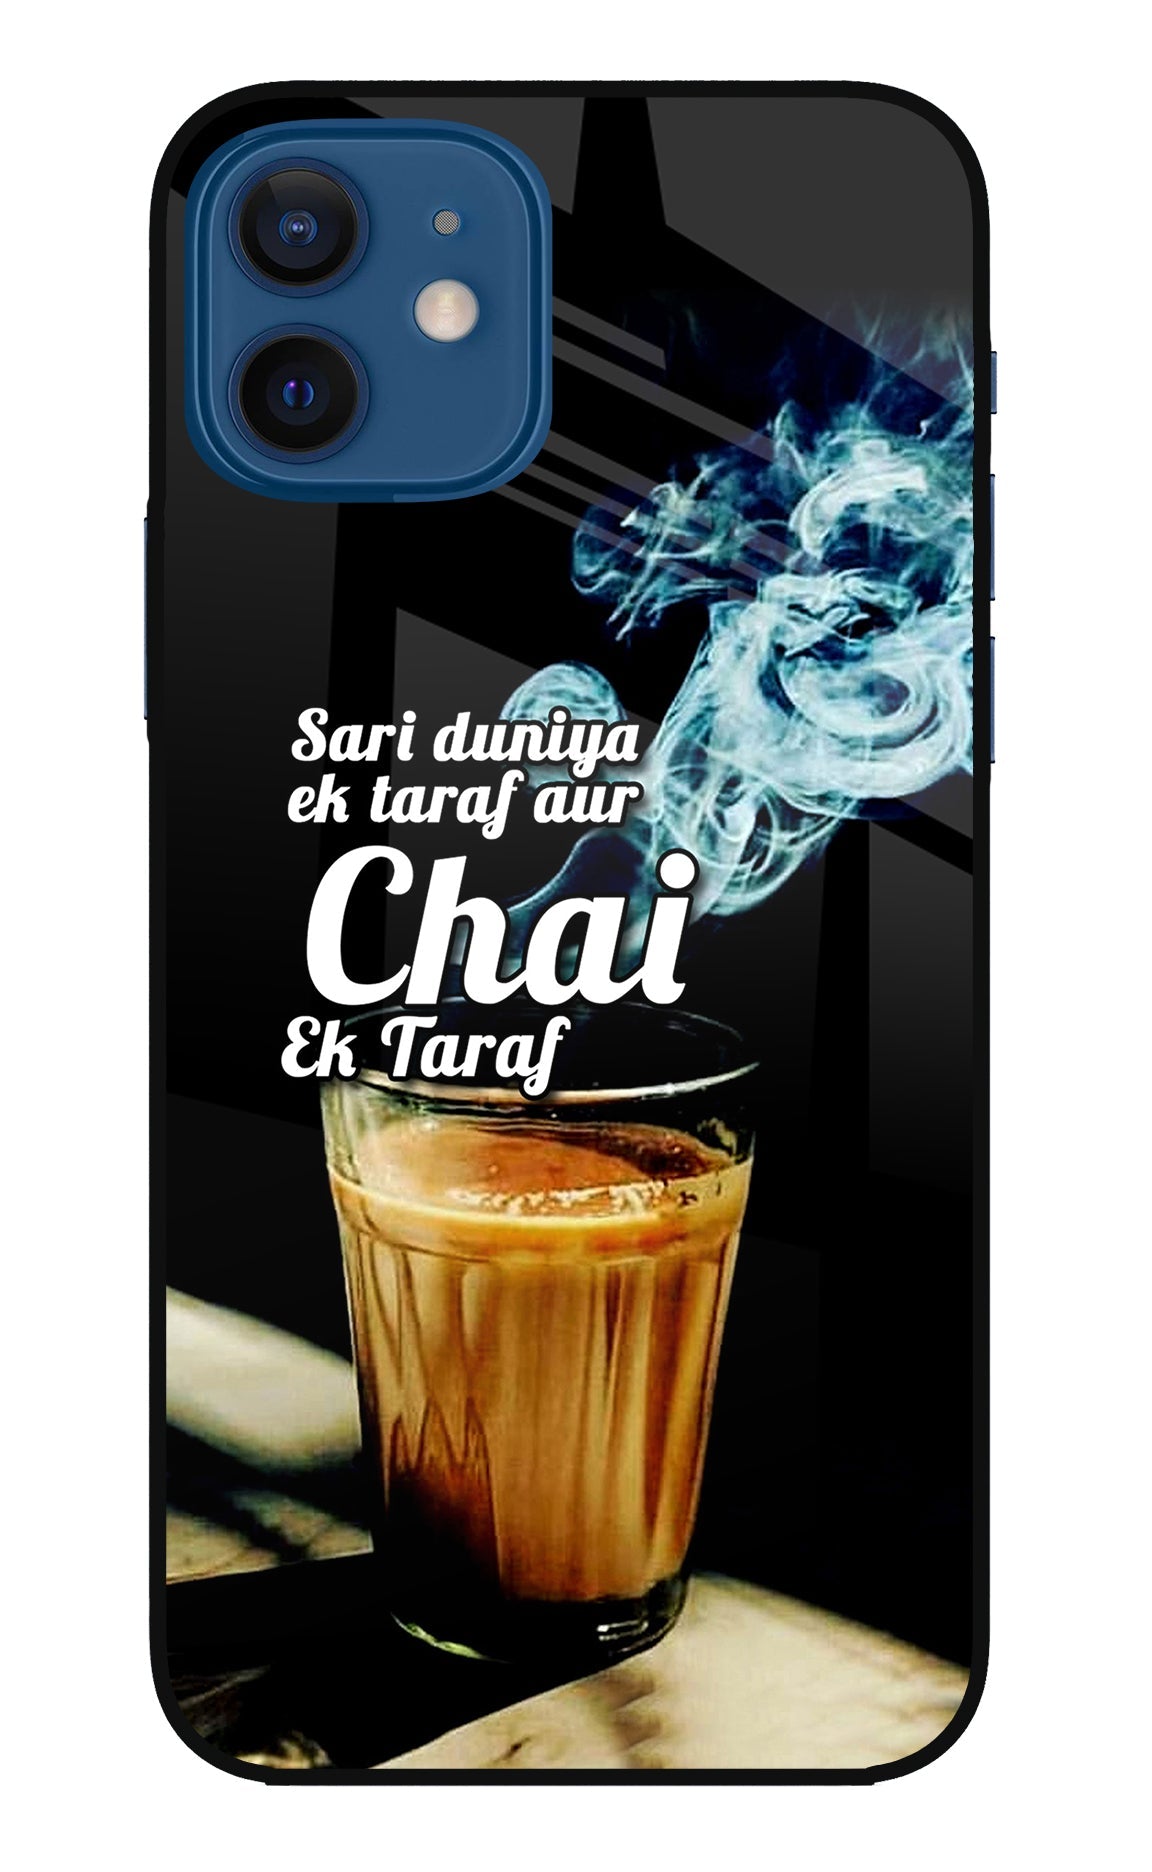 Chai Ek Taraf Quote iPhone 12 Glass Case